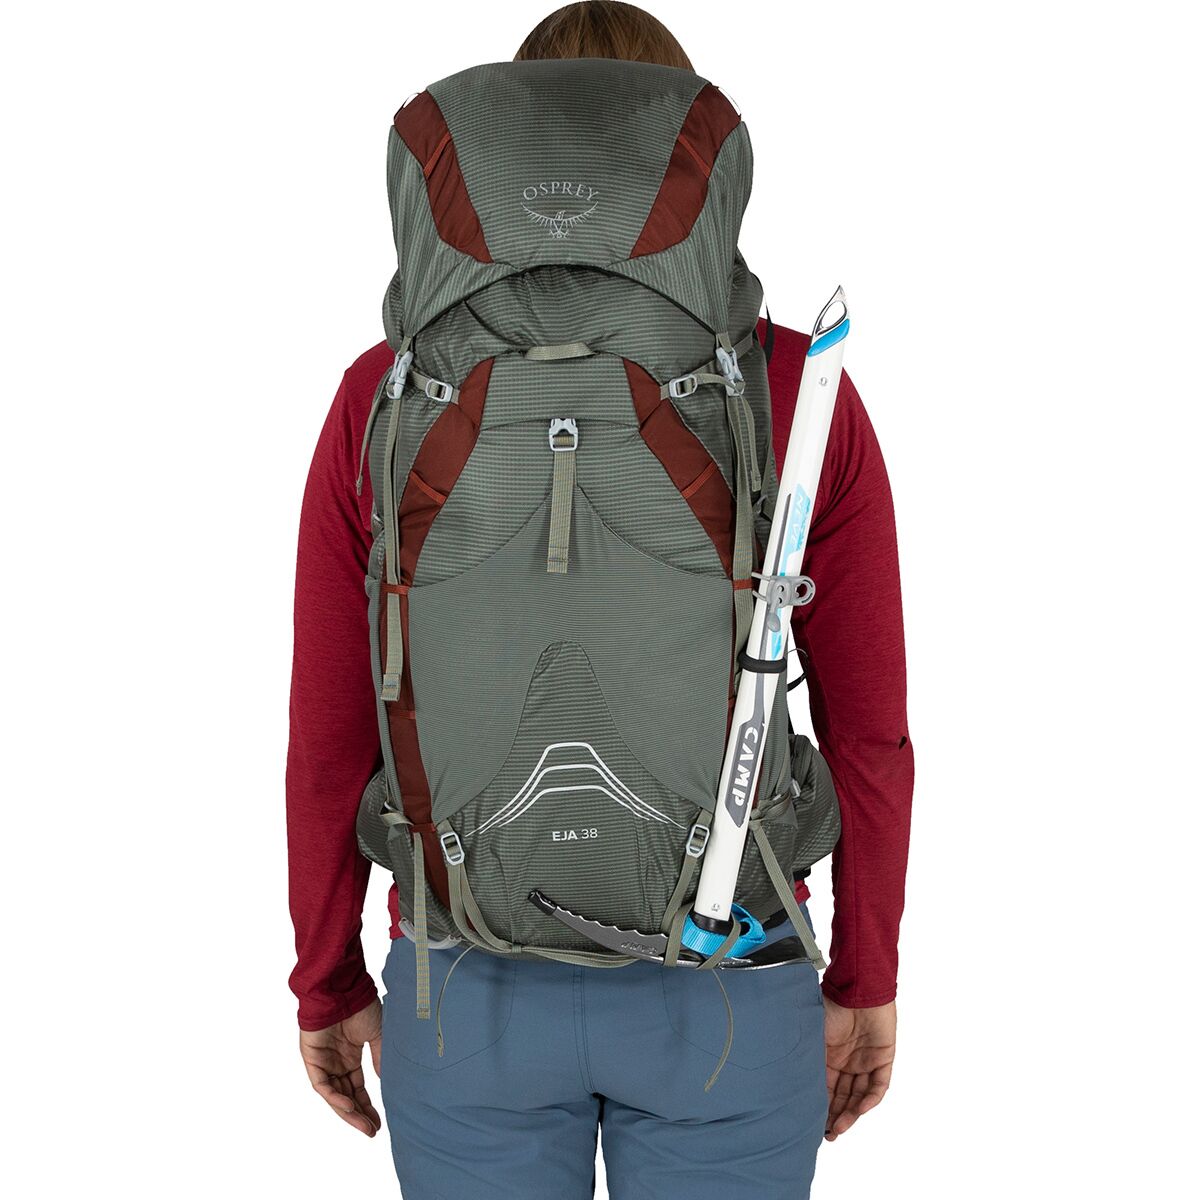 Osprey Packs Eja 38L Backpack - Women's - Hike & Camp